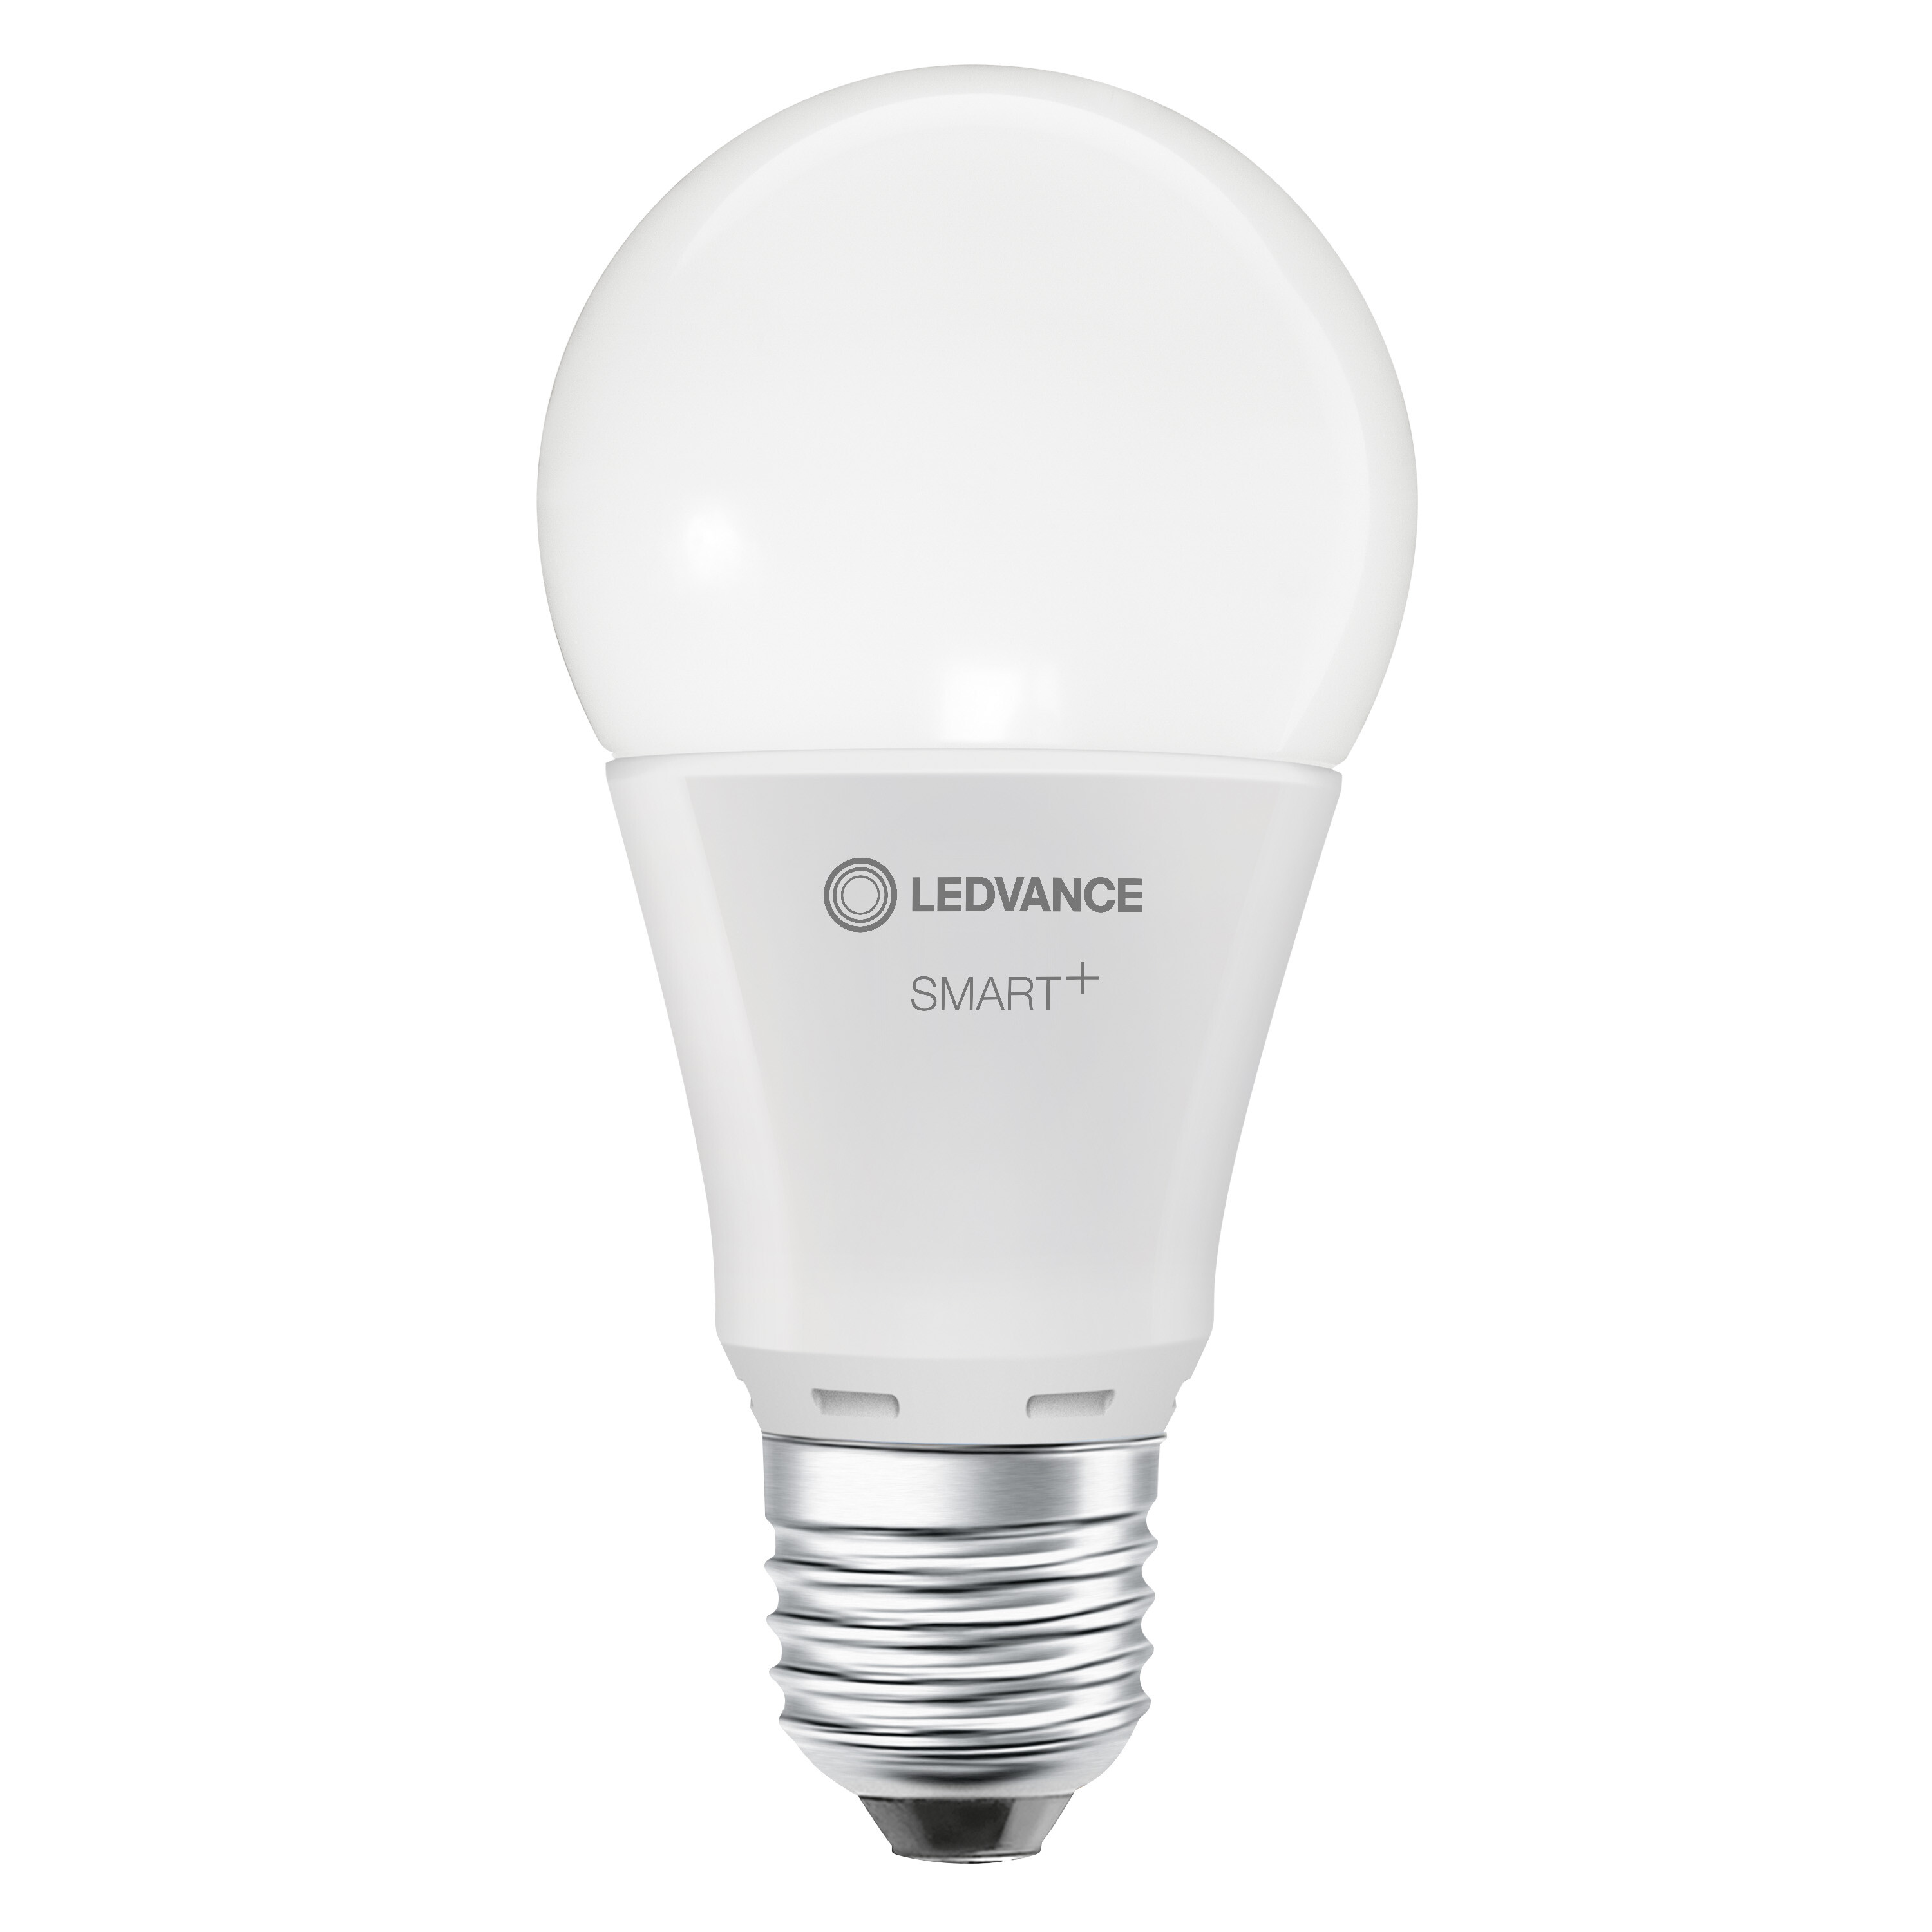 Tunable Lichtfarbe LED WiFi Classic SMART+ LEDVANCE White änderbar Lampe